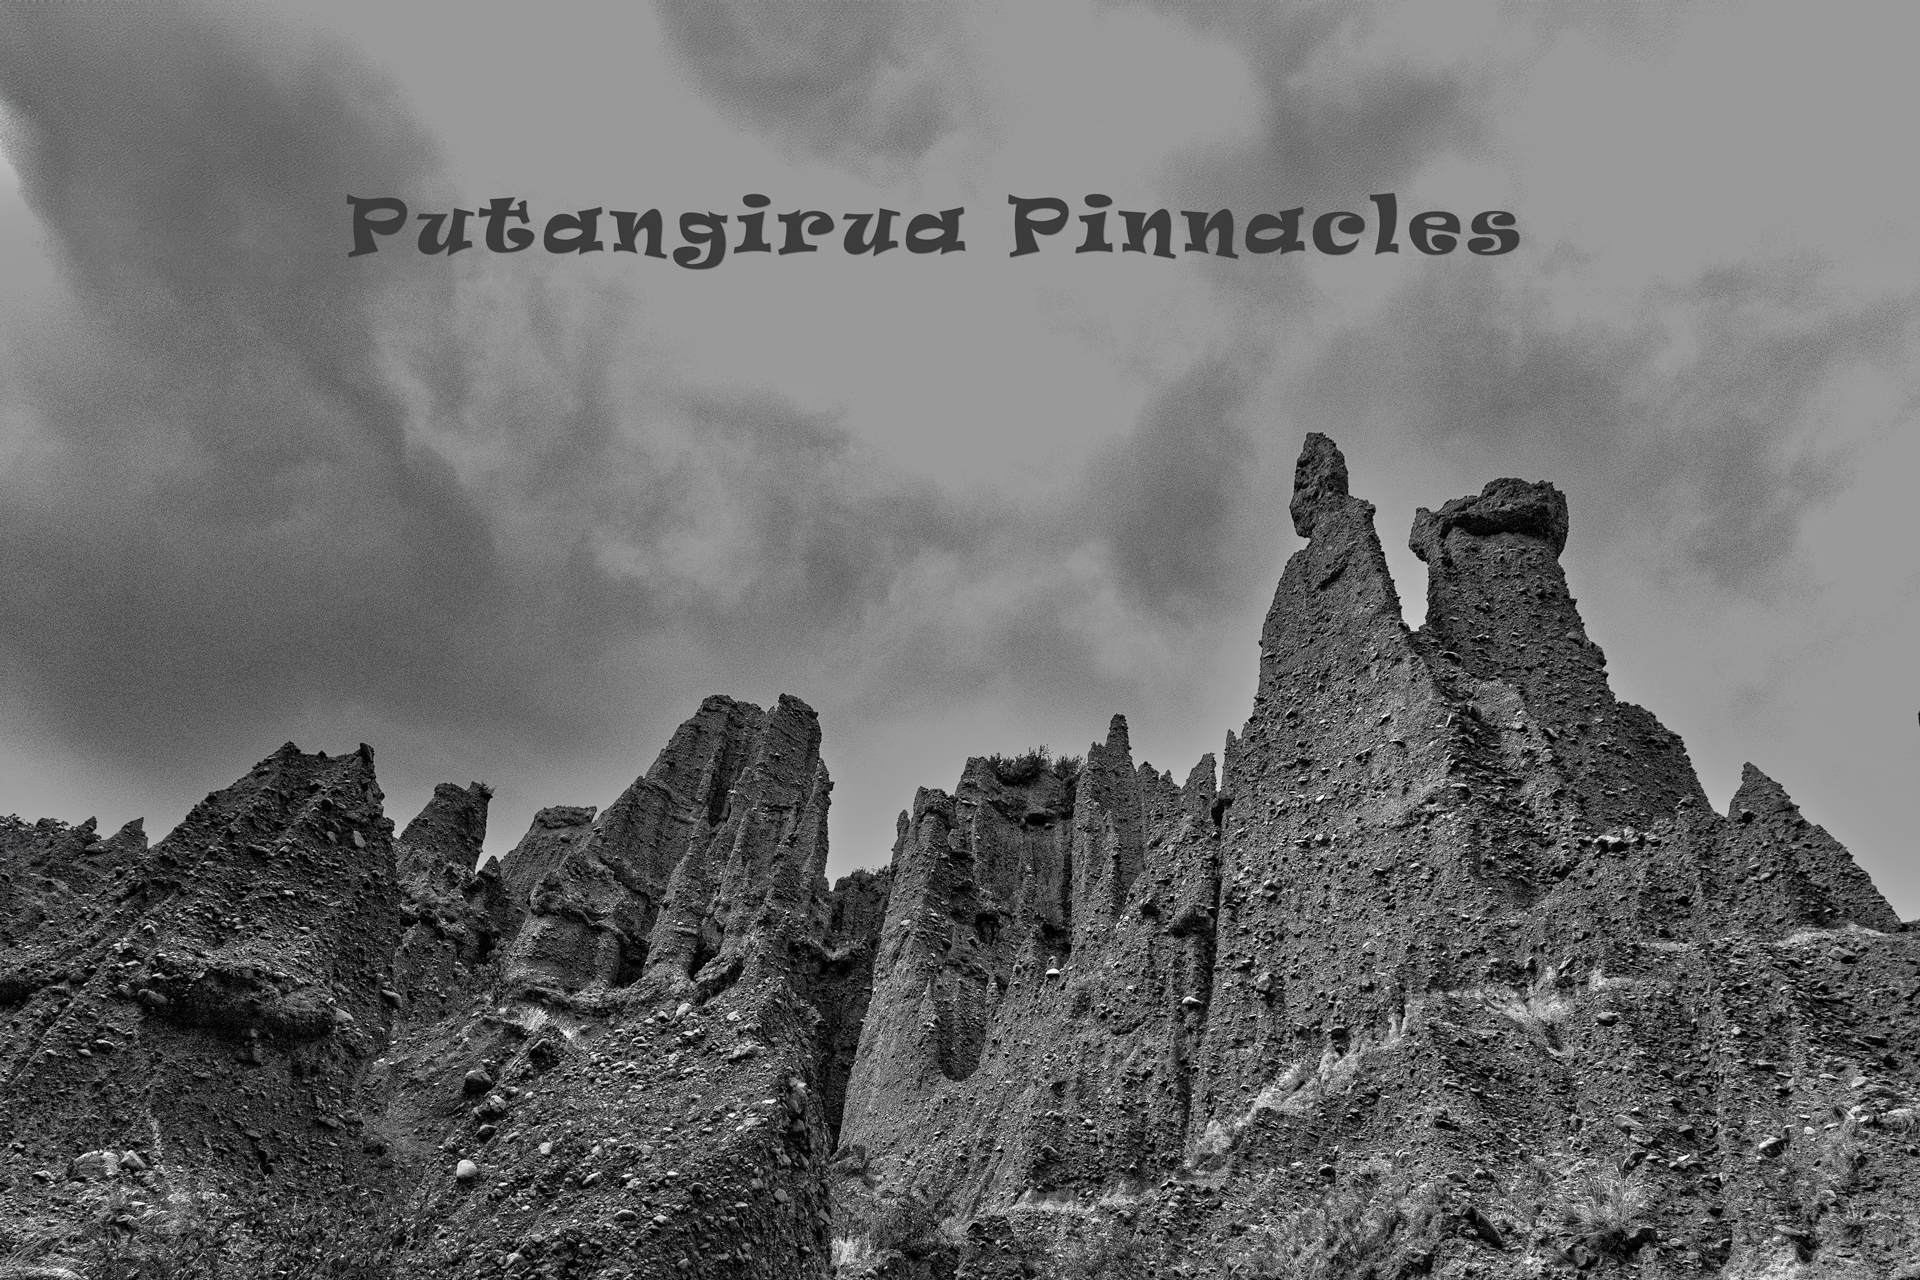 Putangarua Pinnacles Featured Image